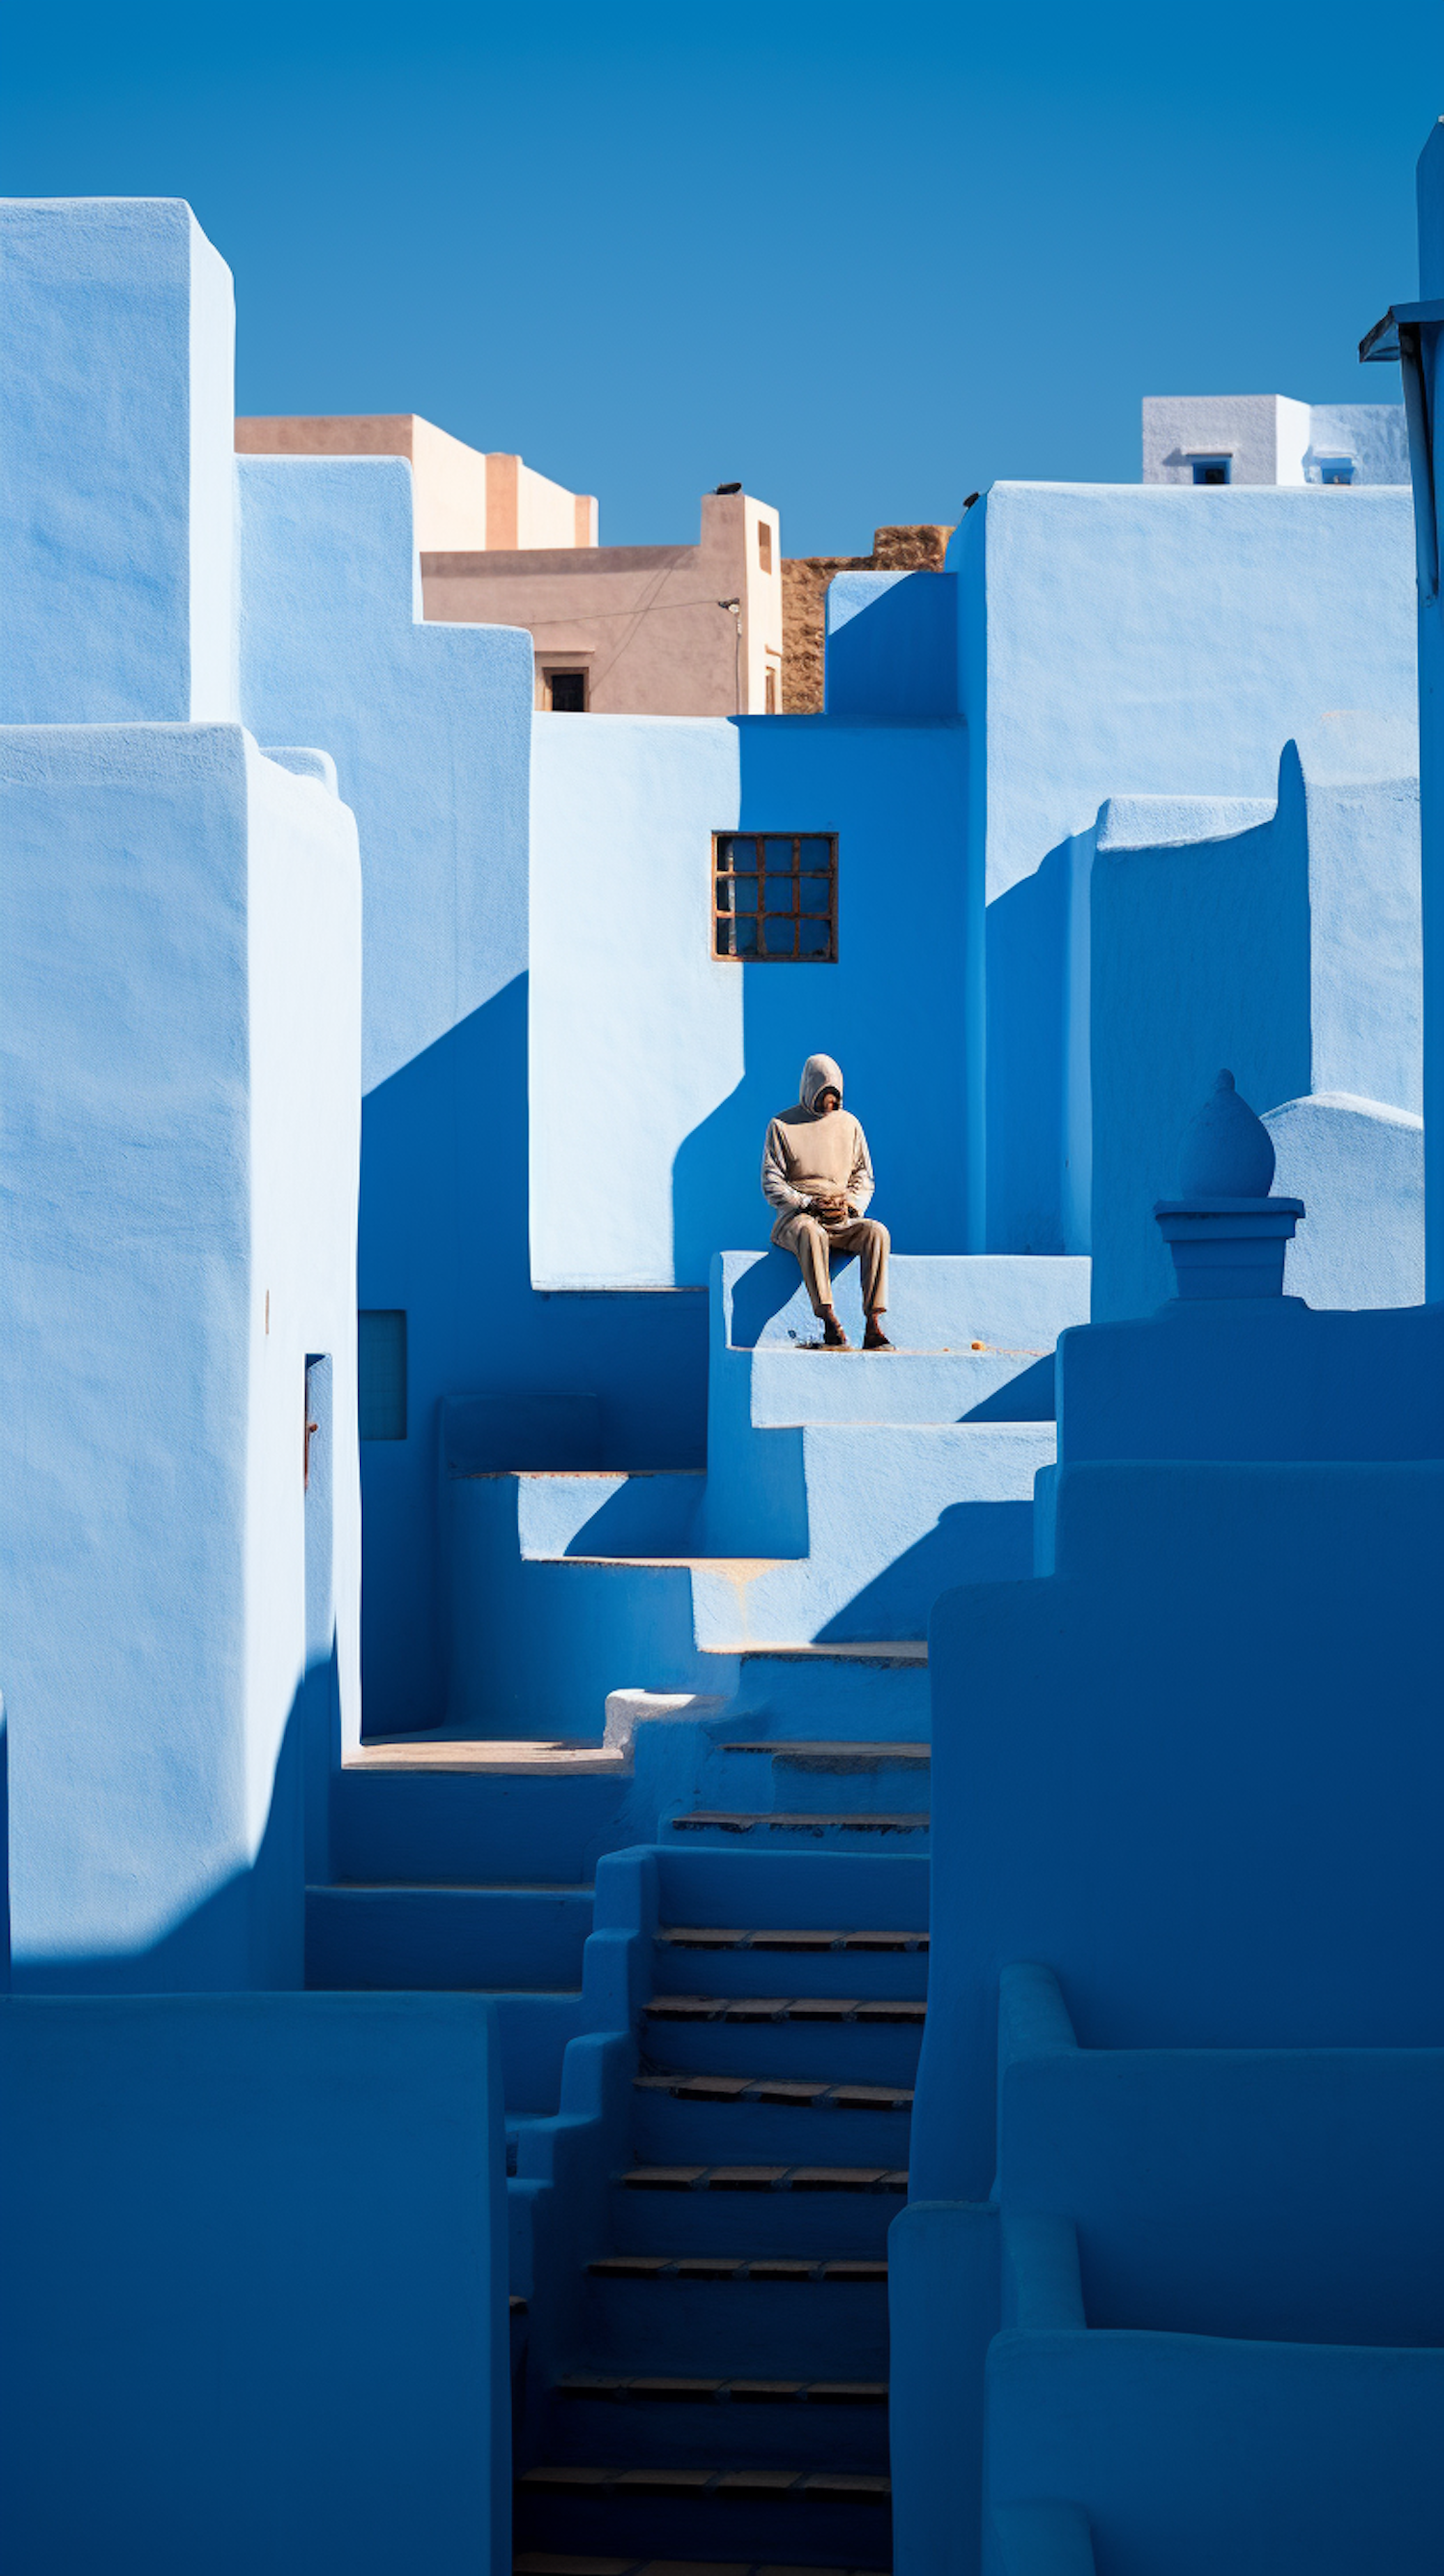 Mediterranean Blues: Solitude on the Steps